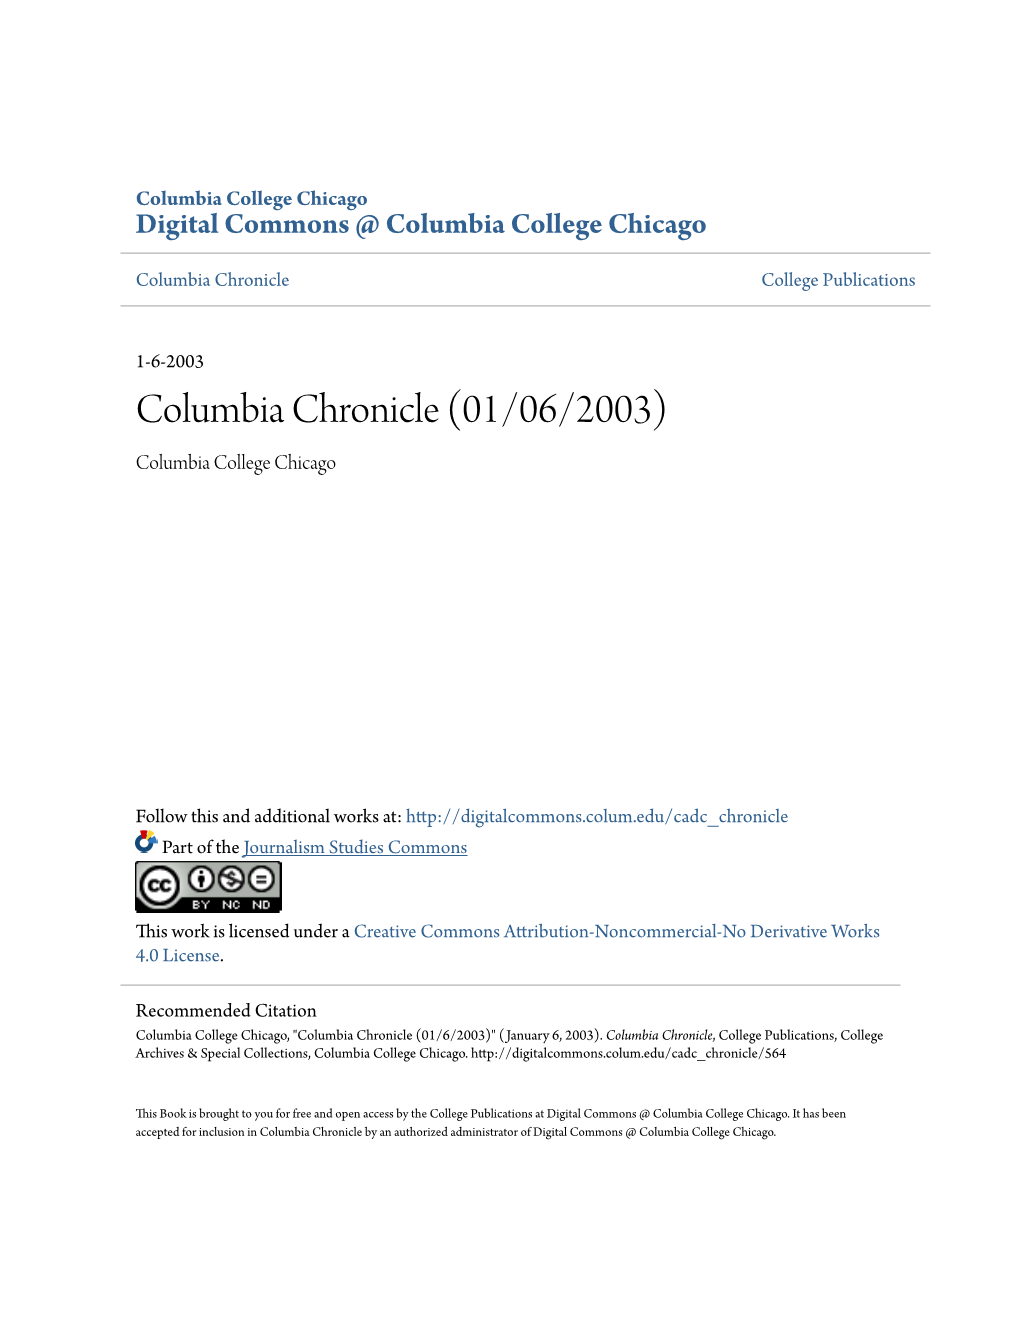 Columbia Chronicle (01/06/2003) Columbia College Chicago